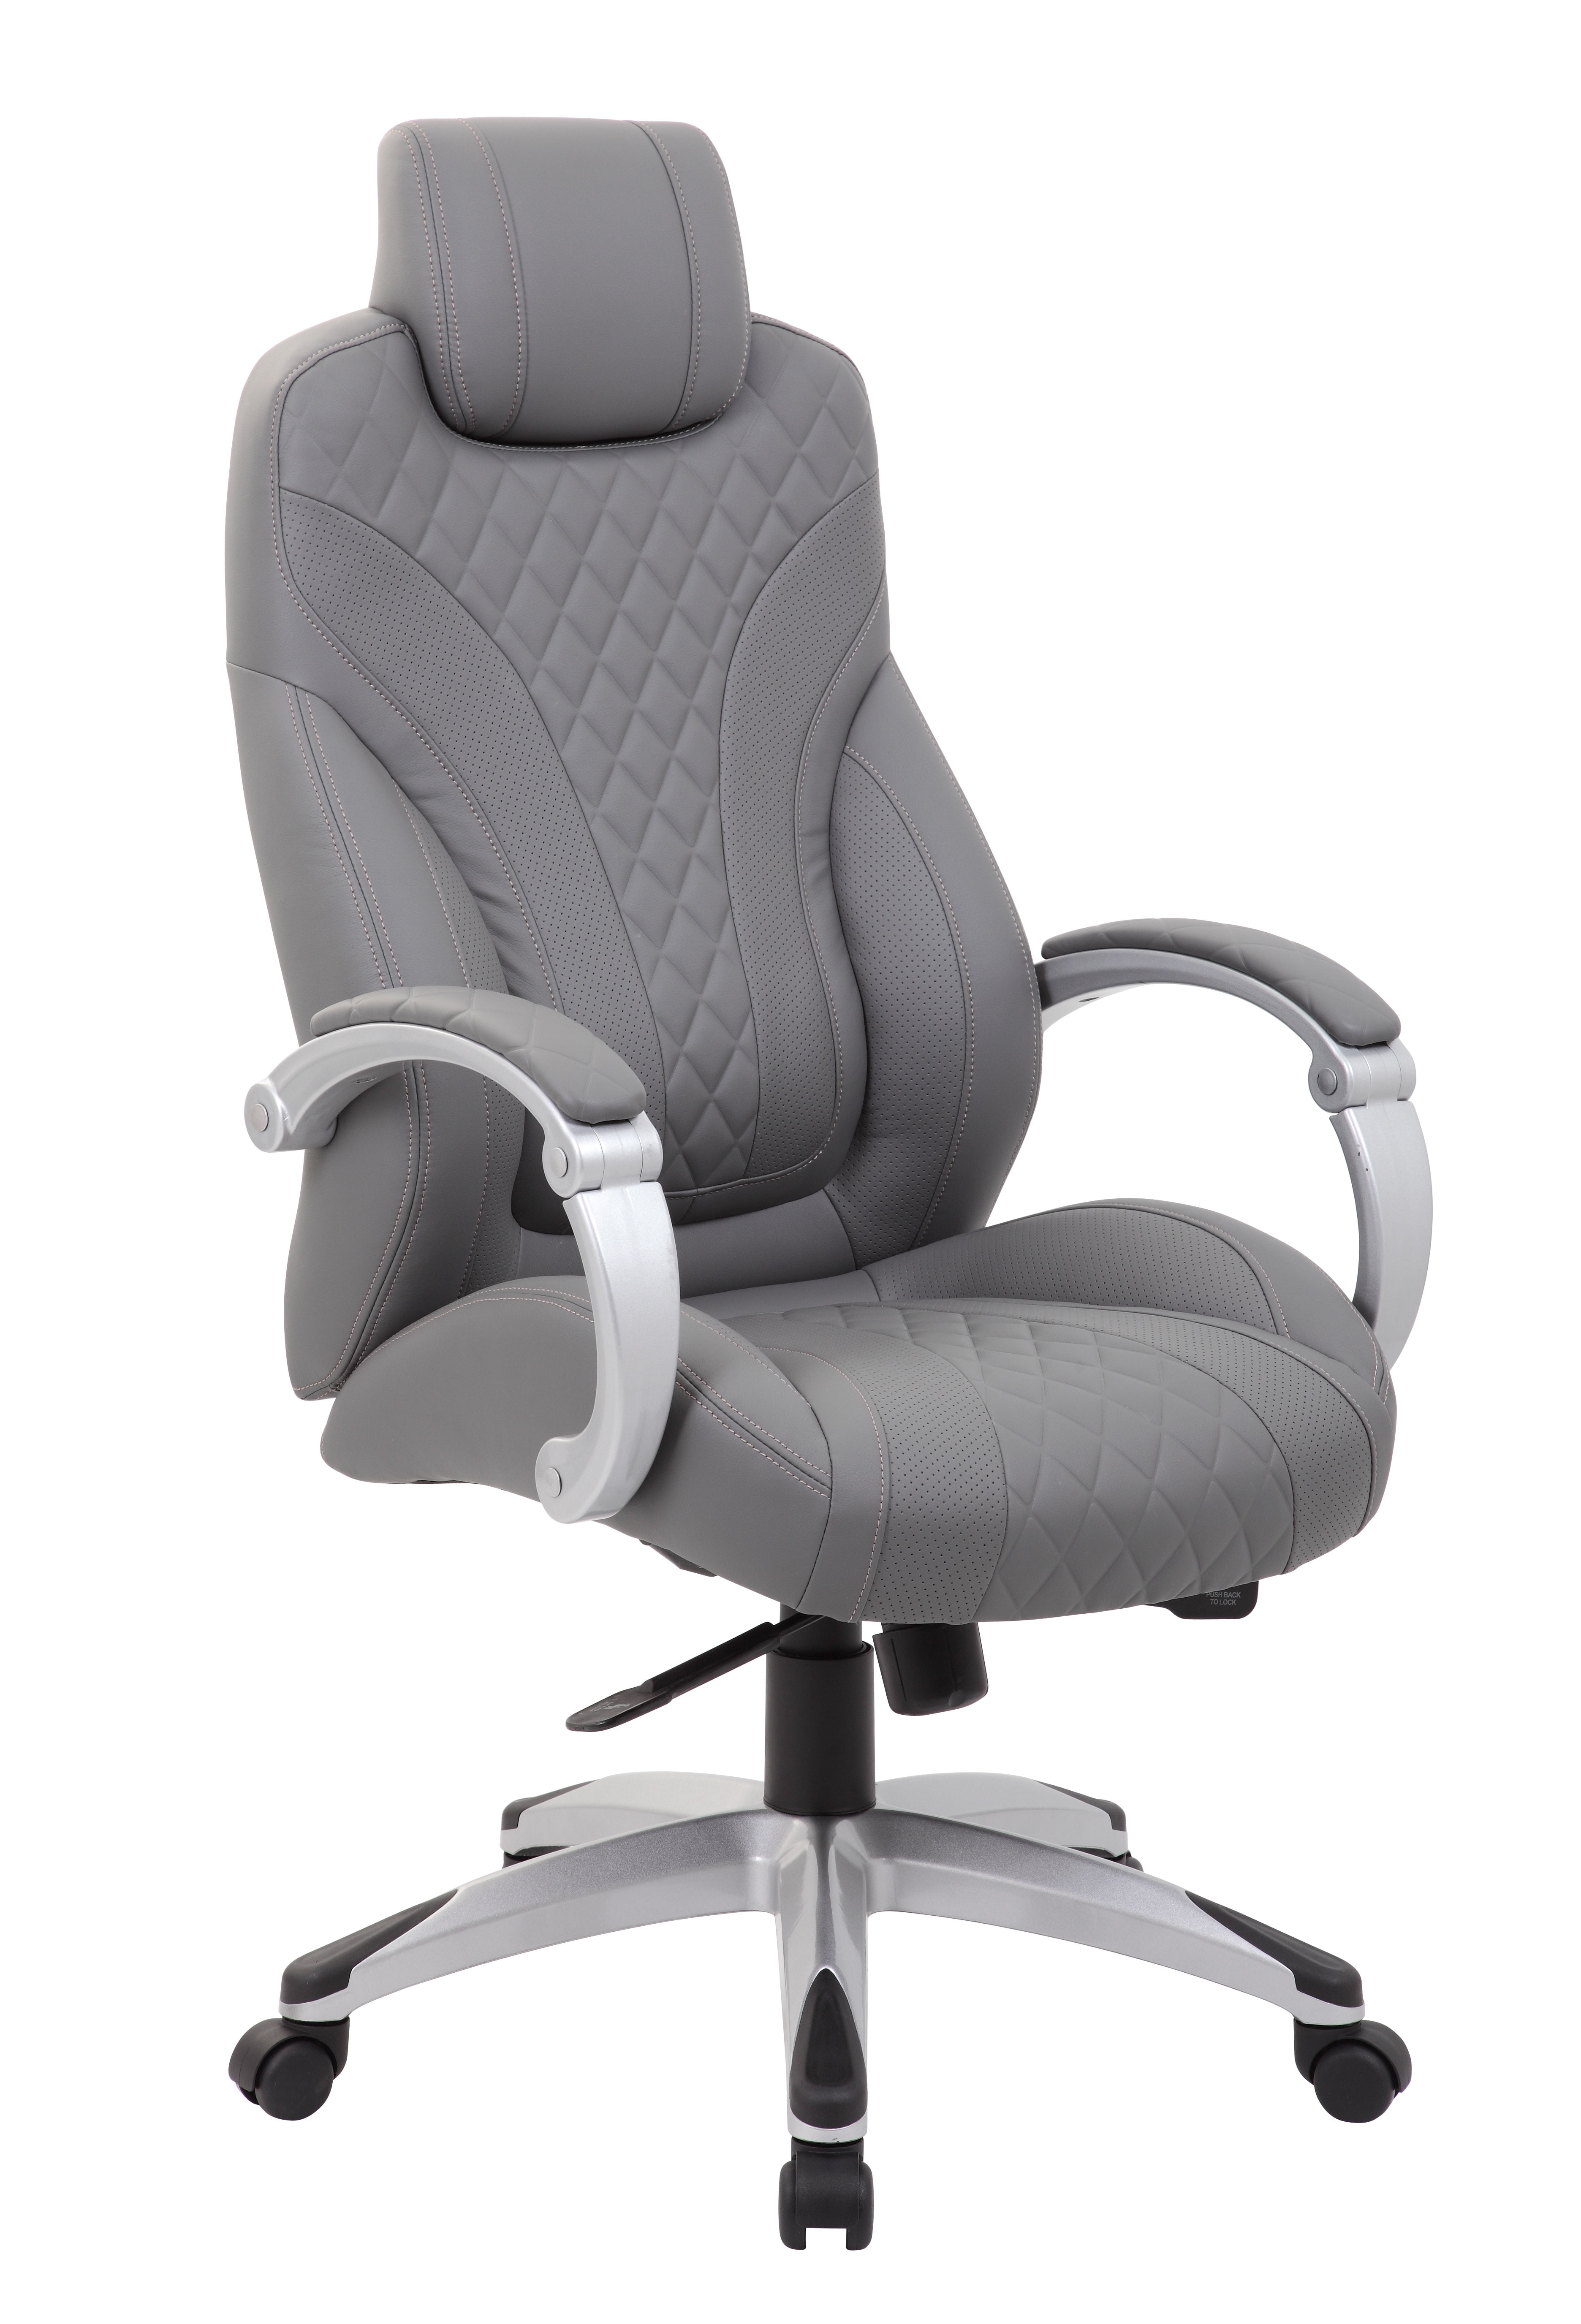 B8871-gy Executive Hinged Arm Chair, Grey